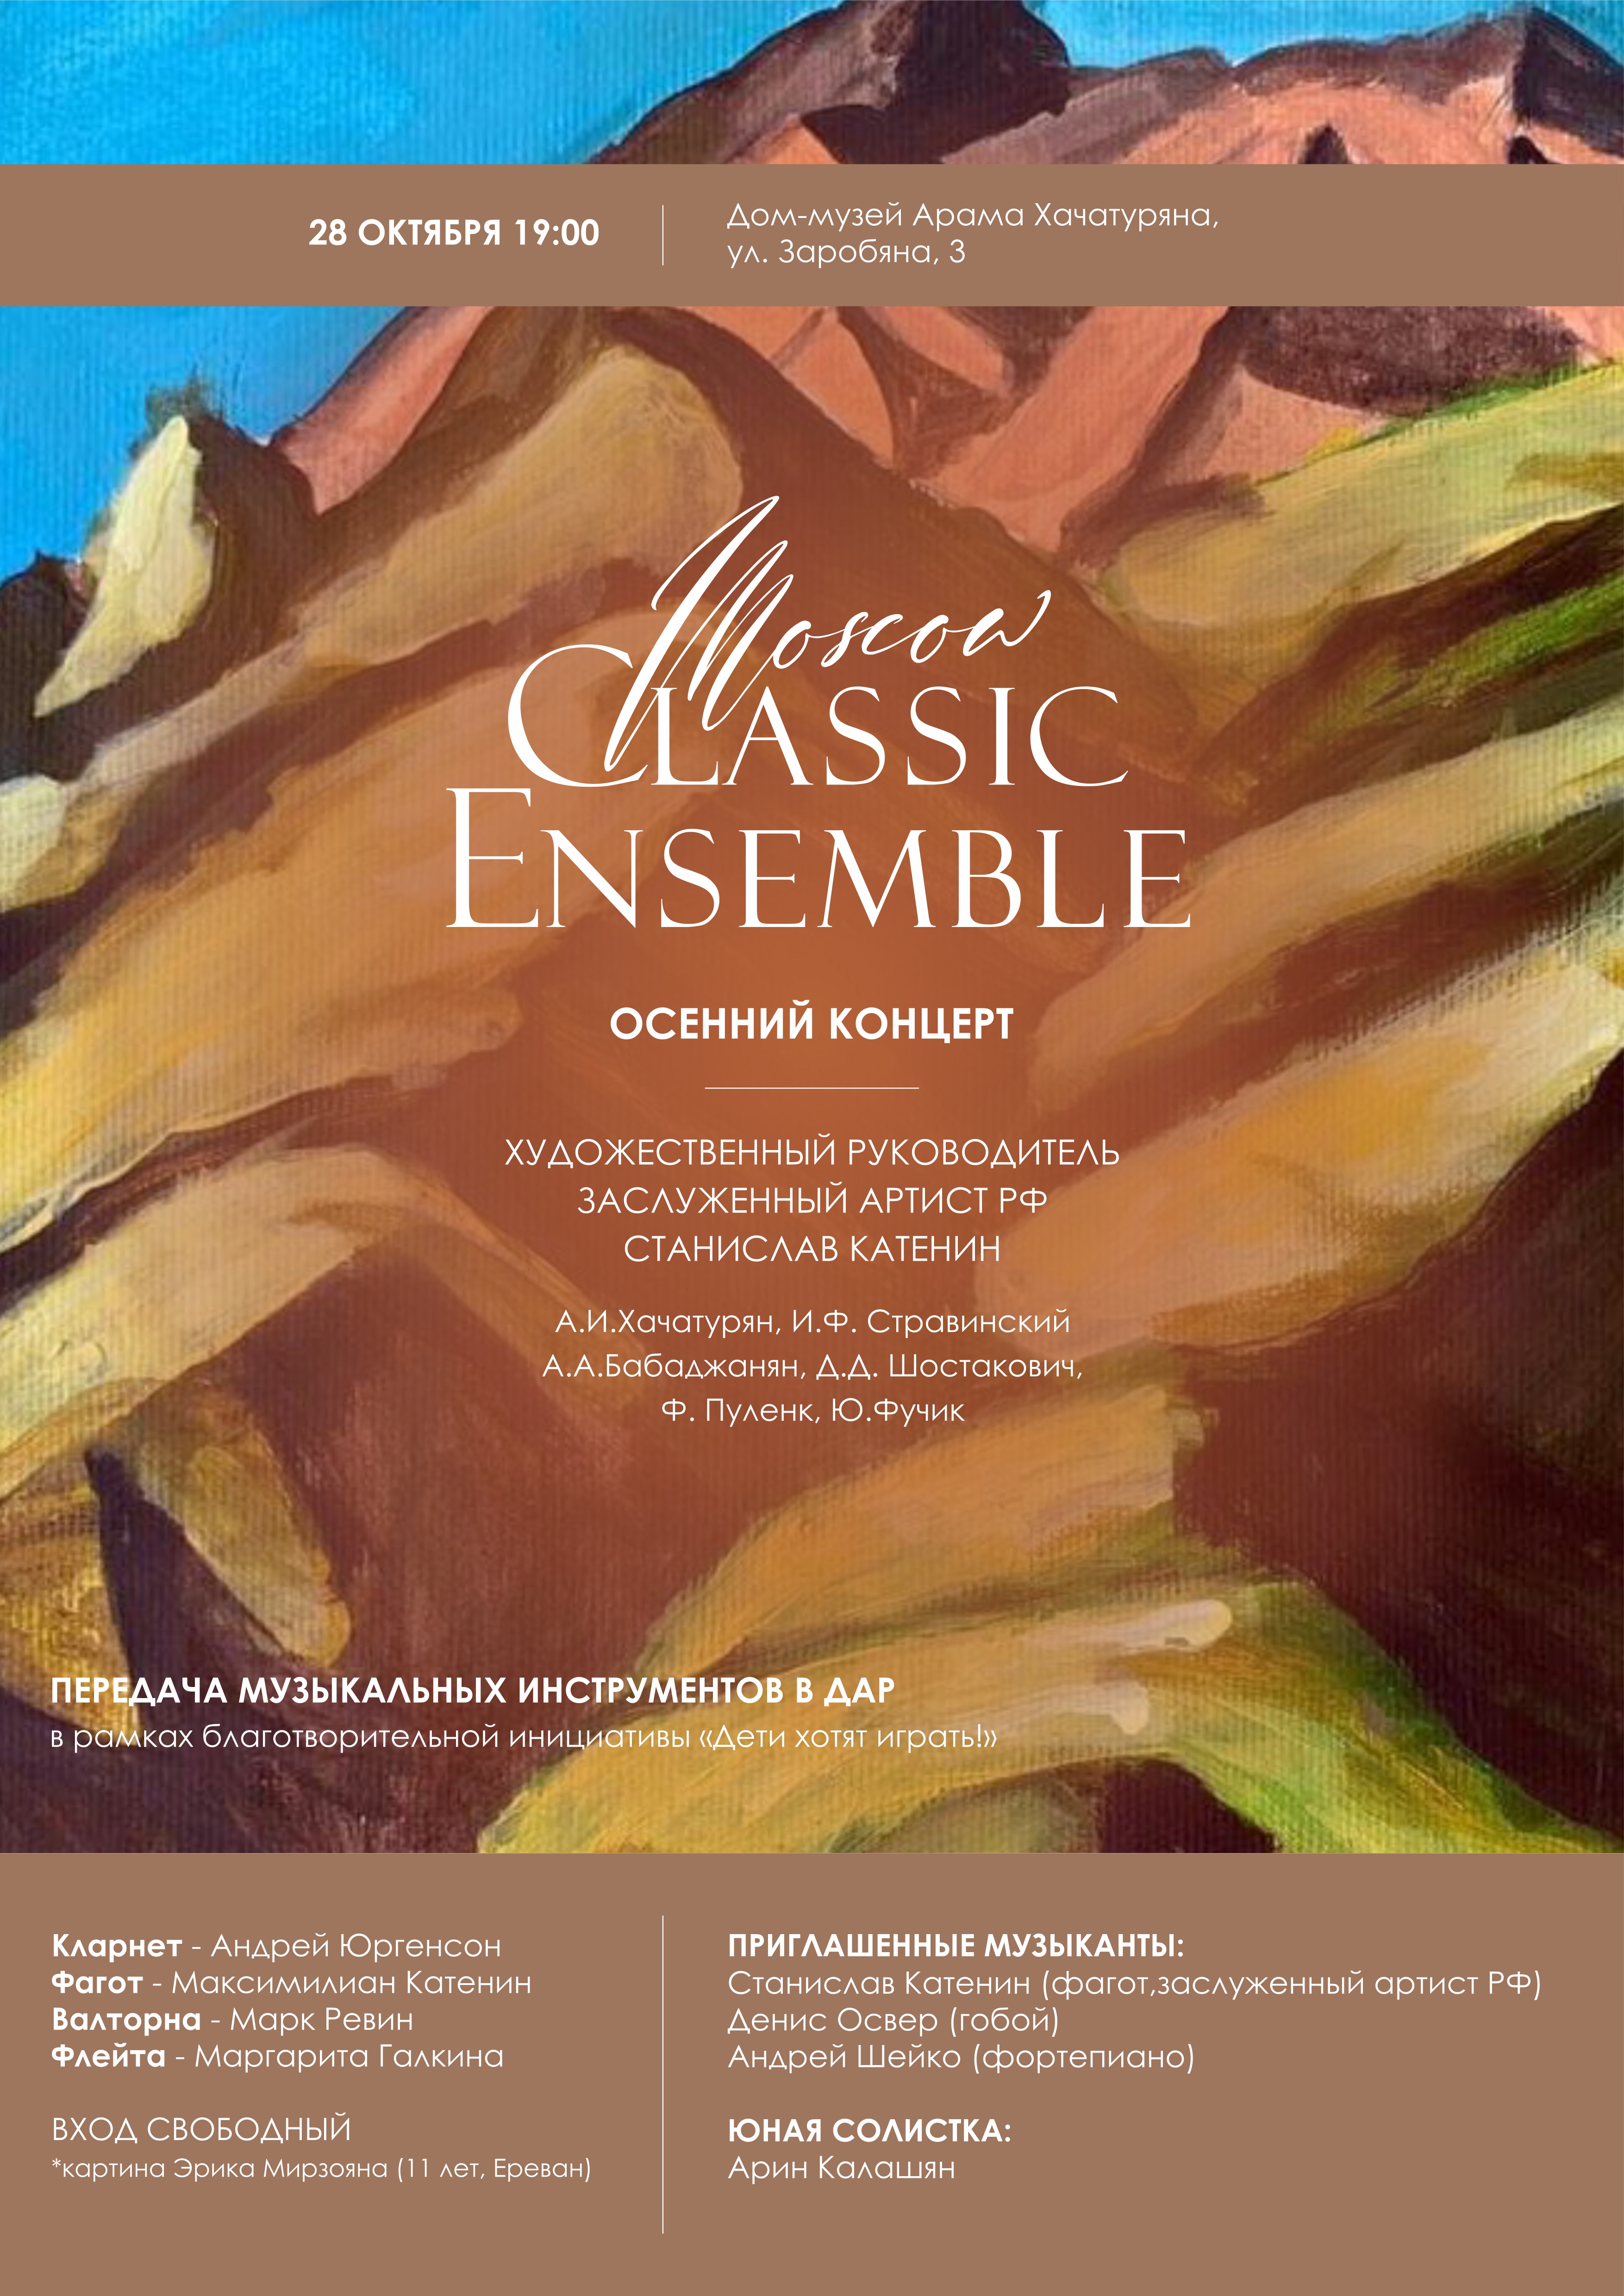 Moscow Classic Ensemble-ը համերգ կտա և երաժշտական գործիքներ կնվիրի Արցախի դպրոցներին